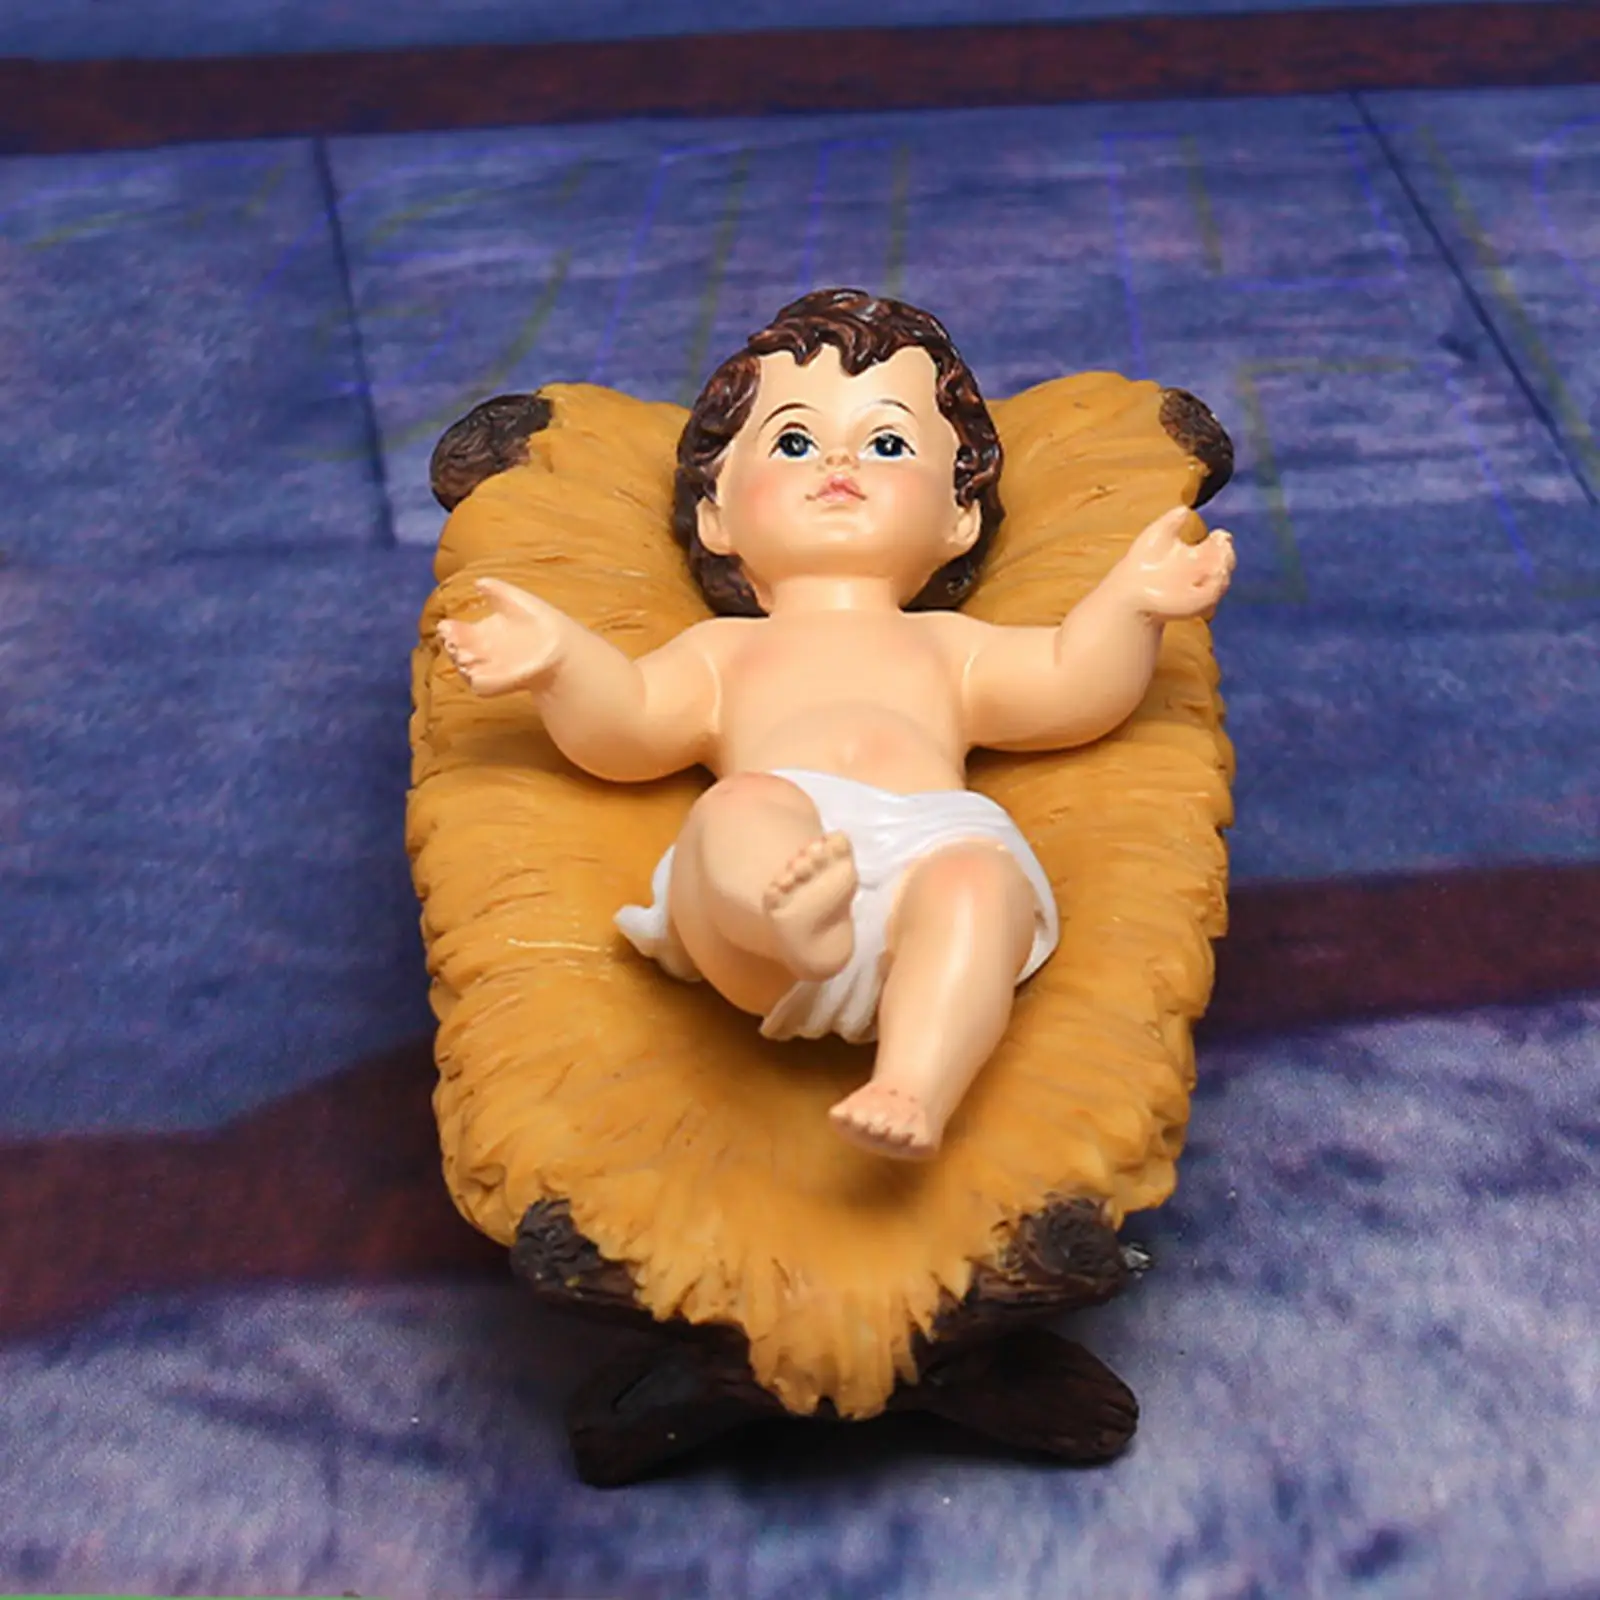 Jesus Statue Crafts Newborn Scene Doll Figurine Sculpture for Holiday Porch